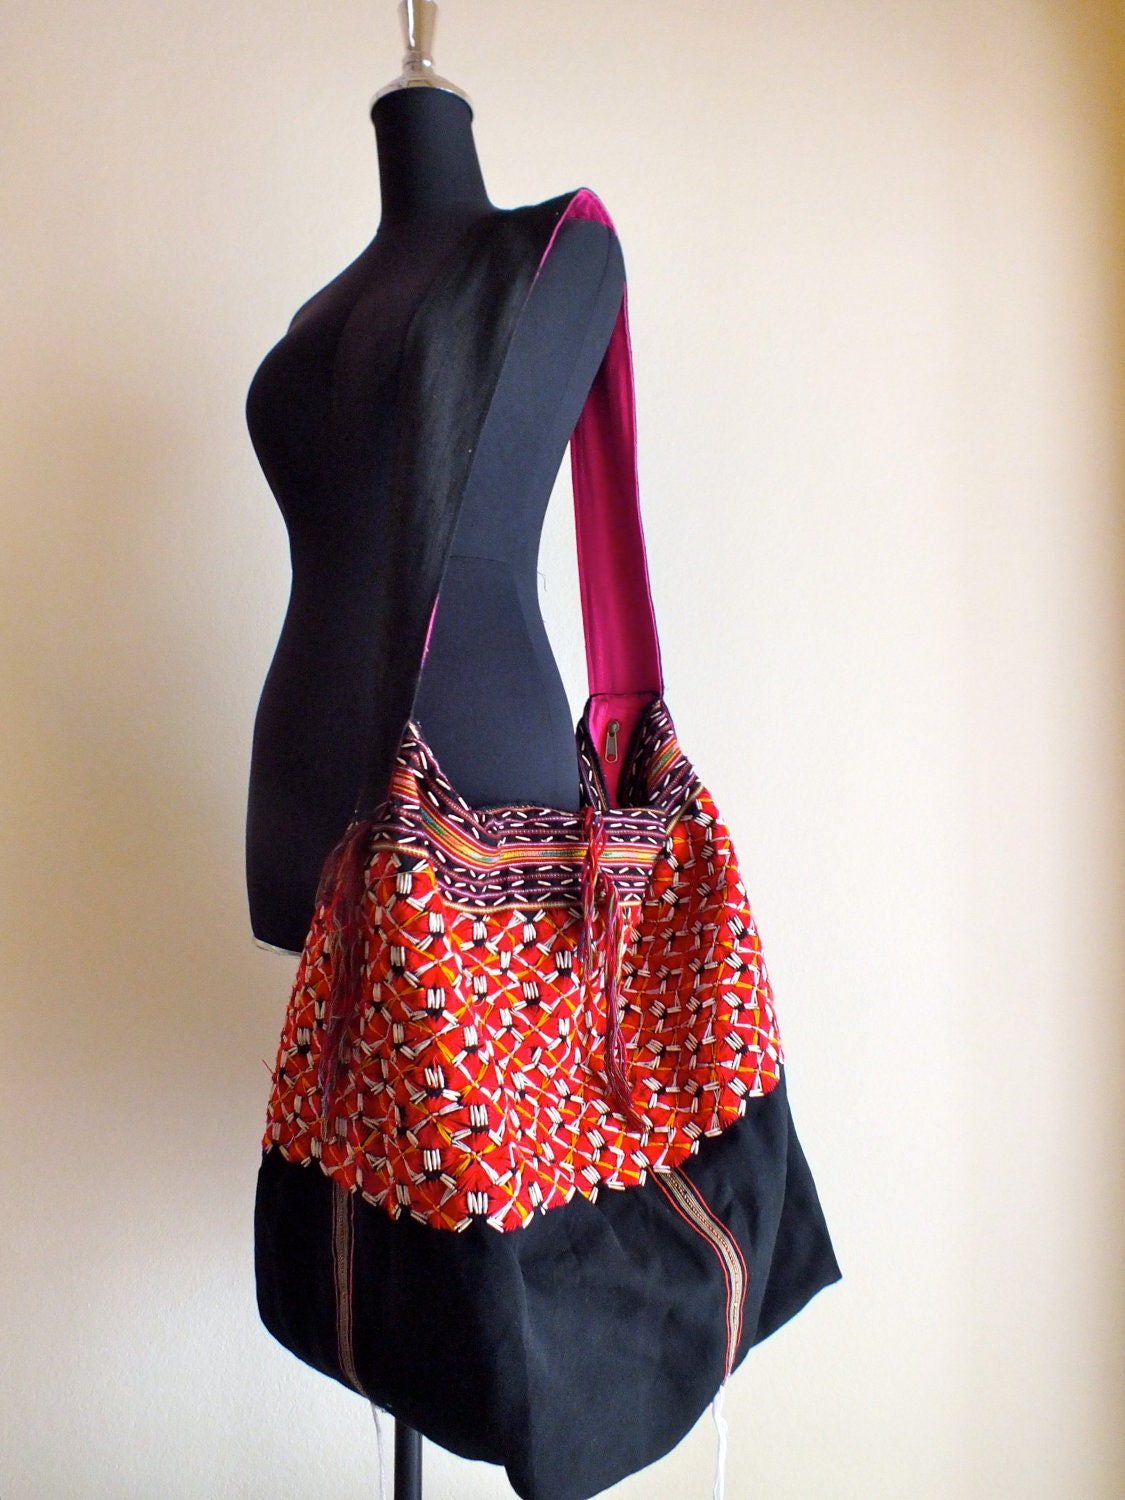 Ethnic Handmade Handbags vintage fabric by shopthailand on Etsy